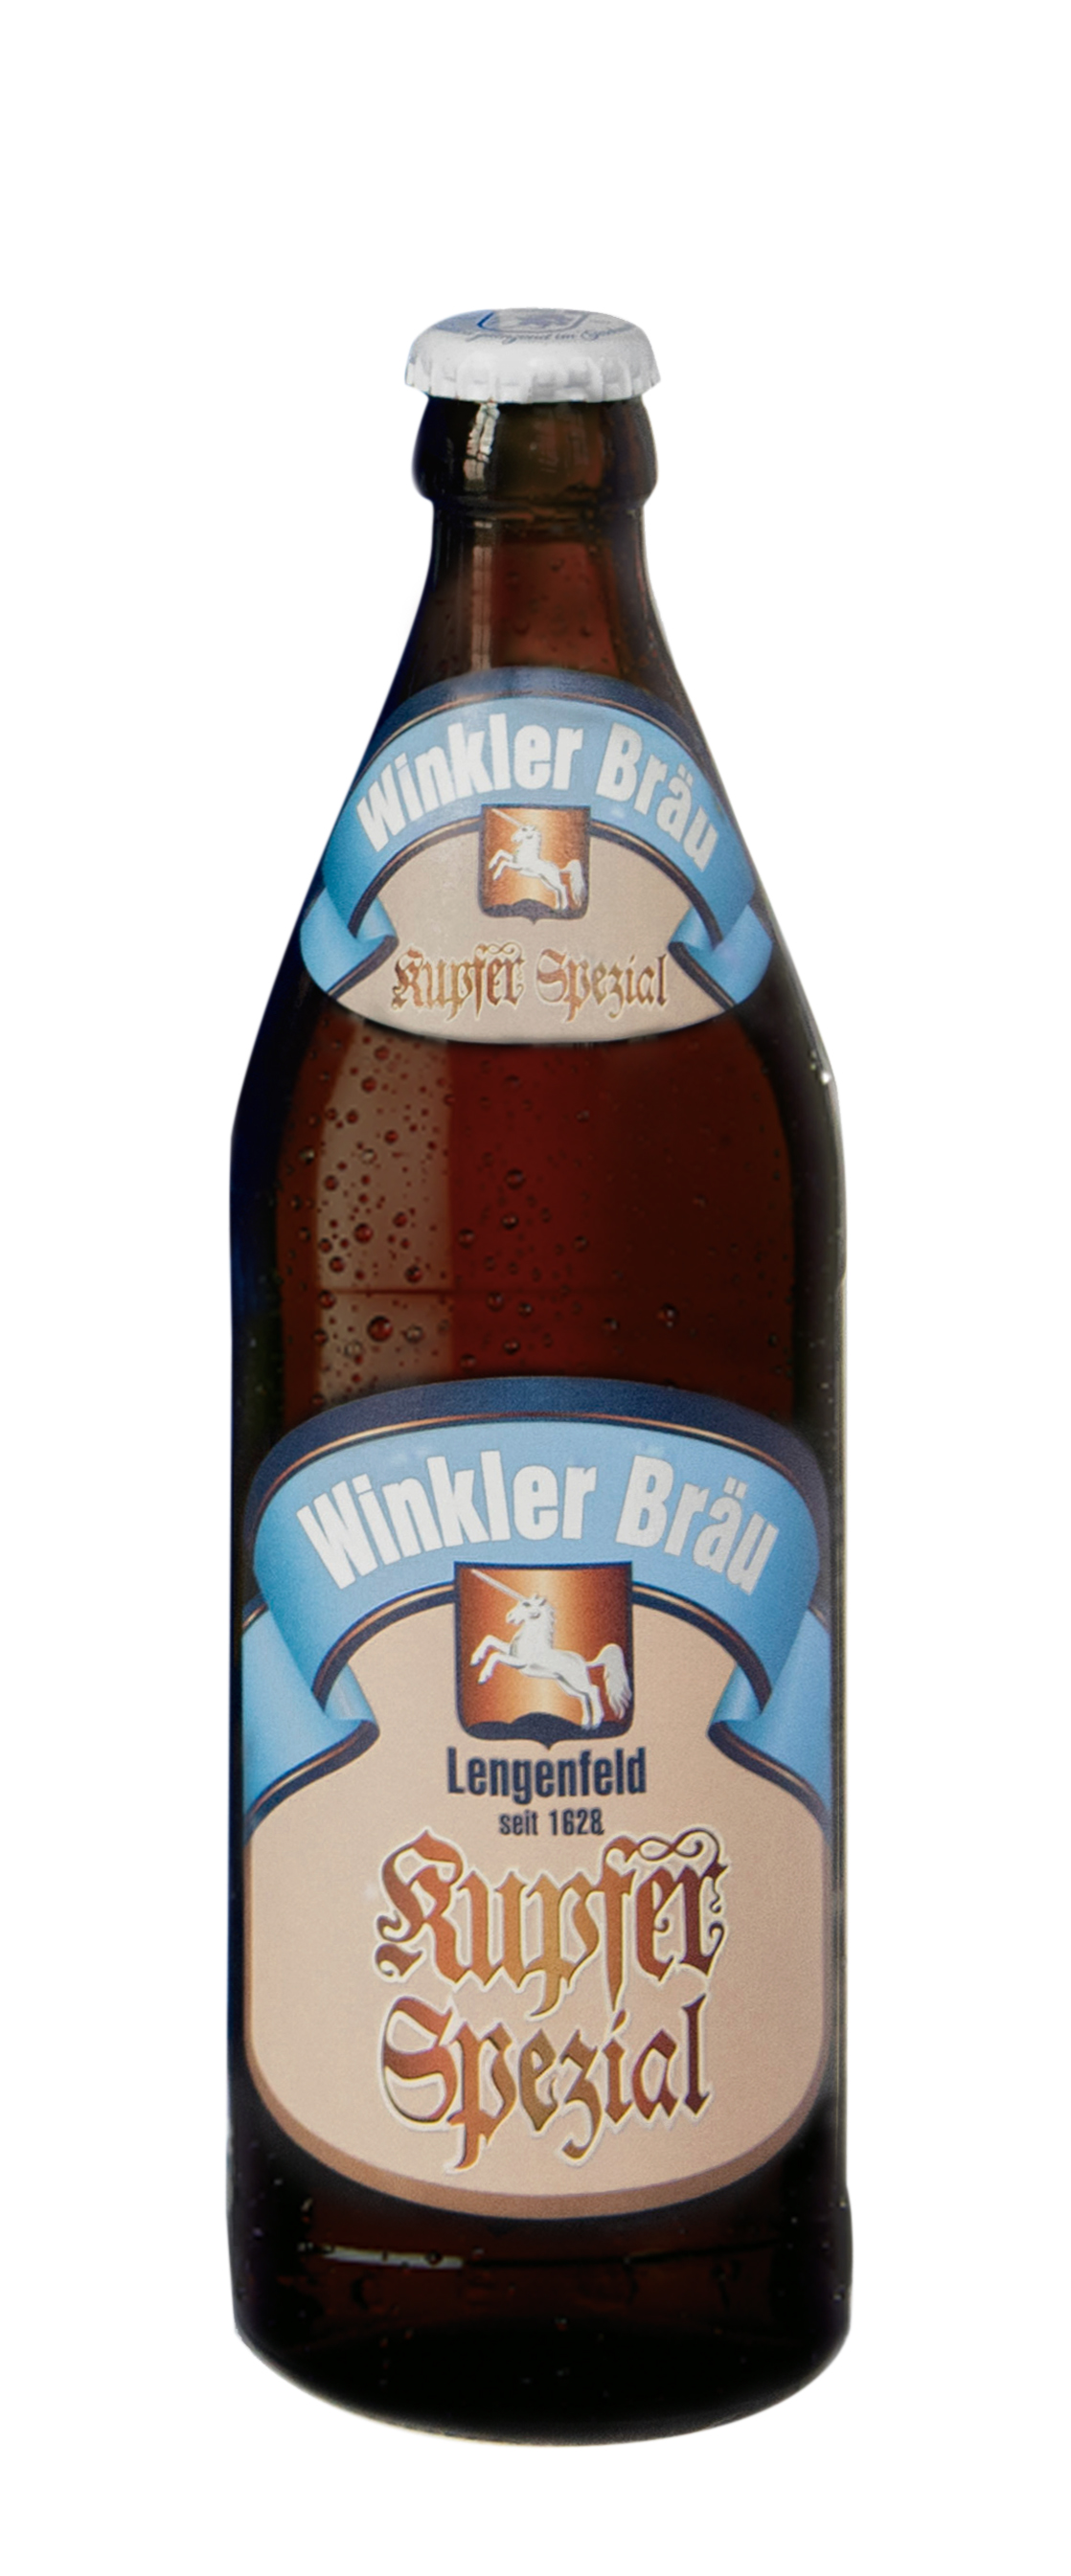 Winkler Bräu Kupfer Spezial